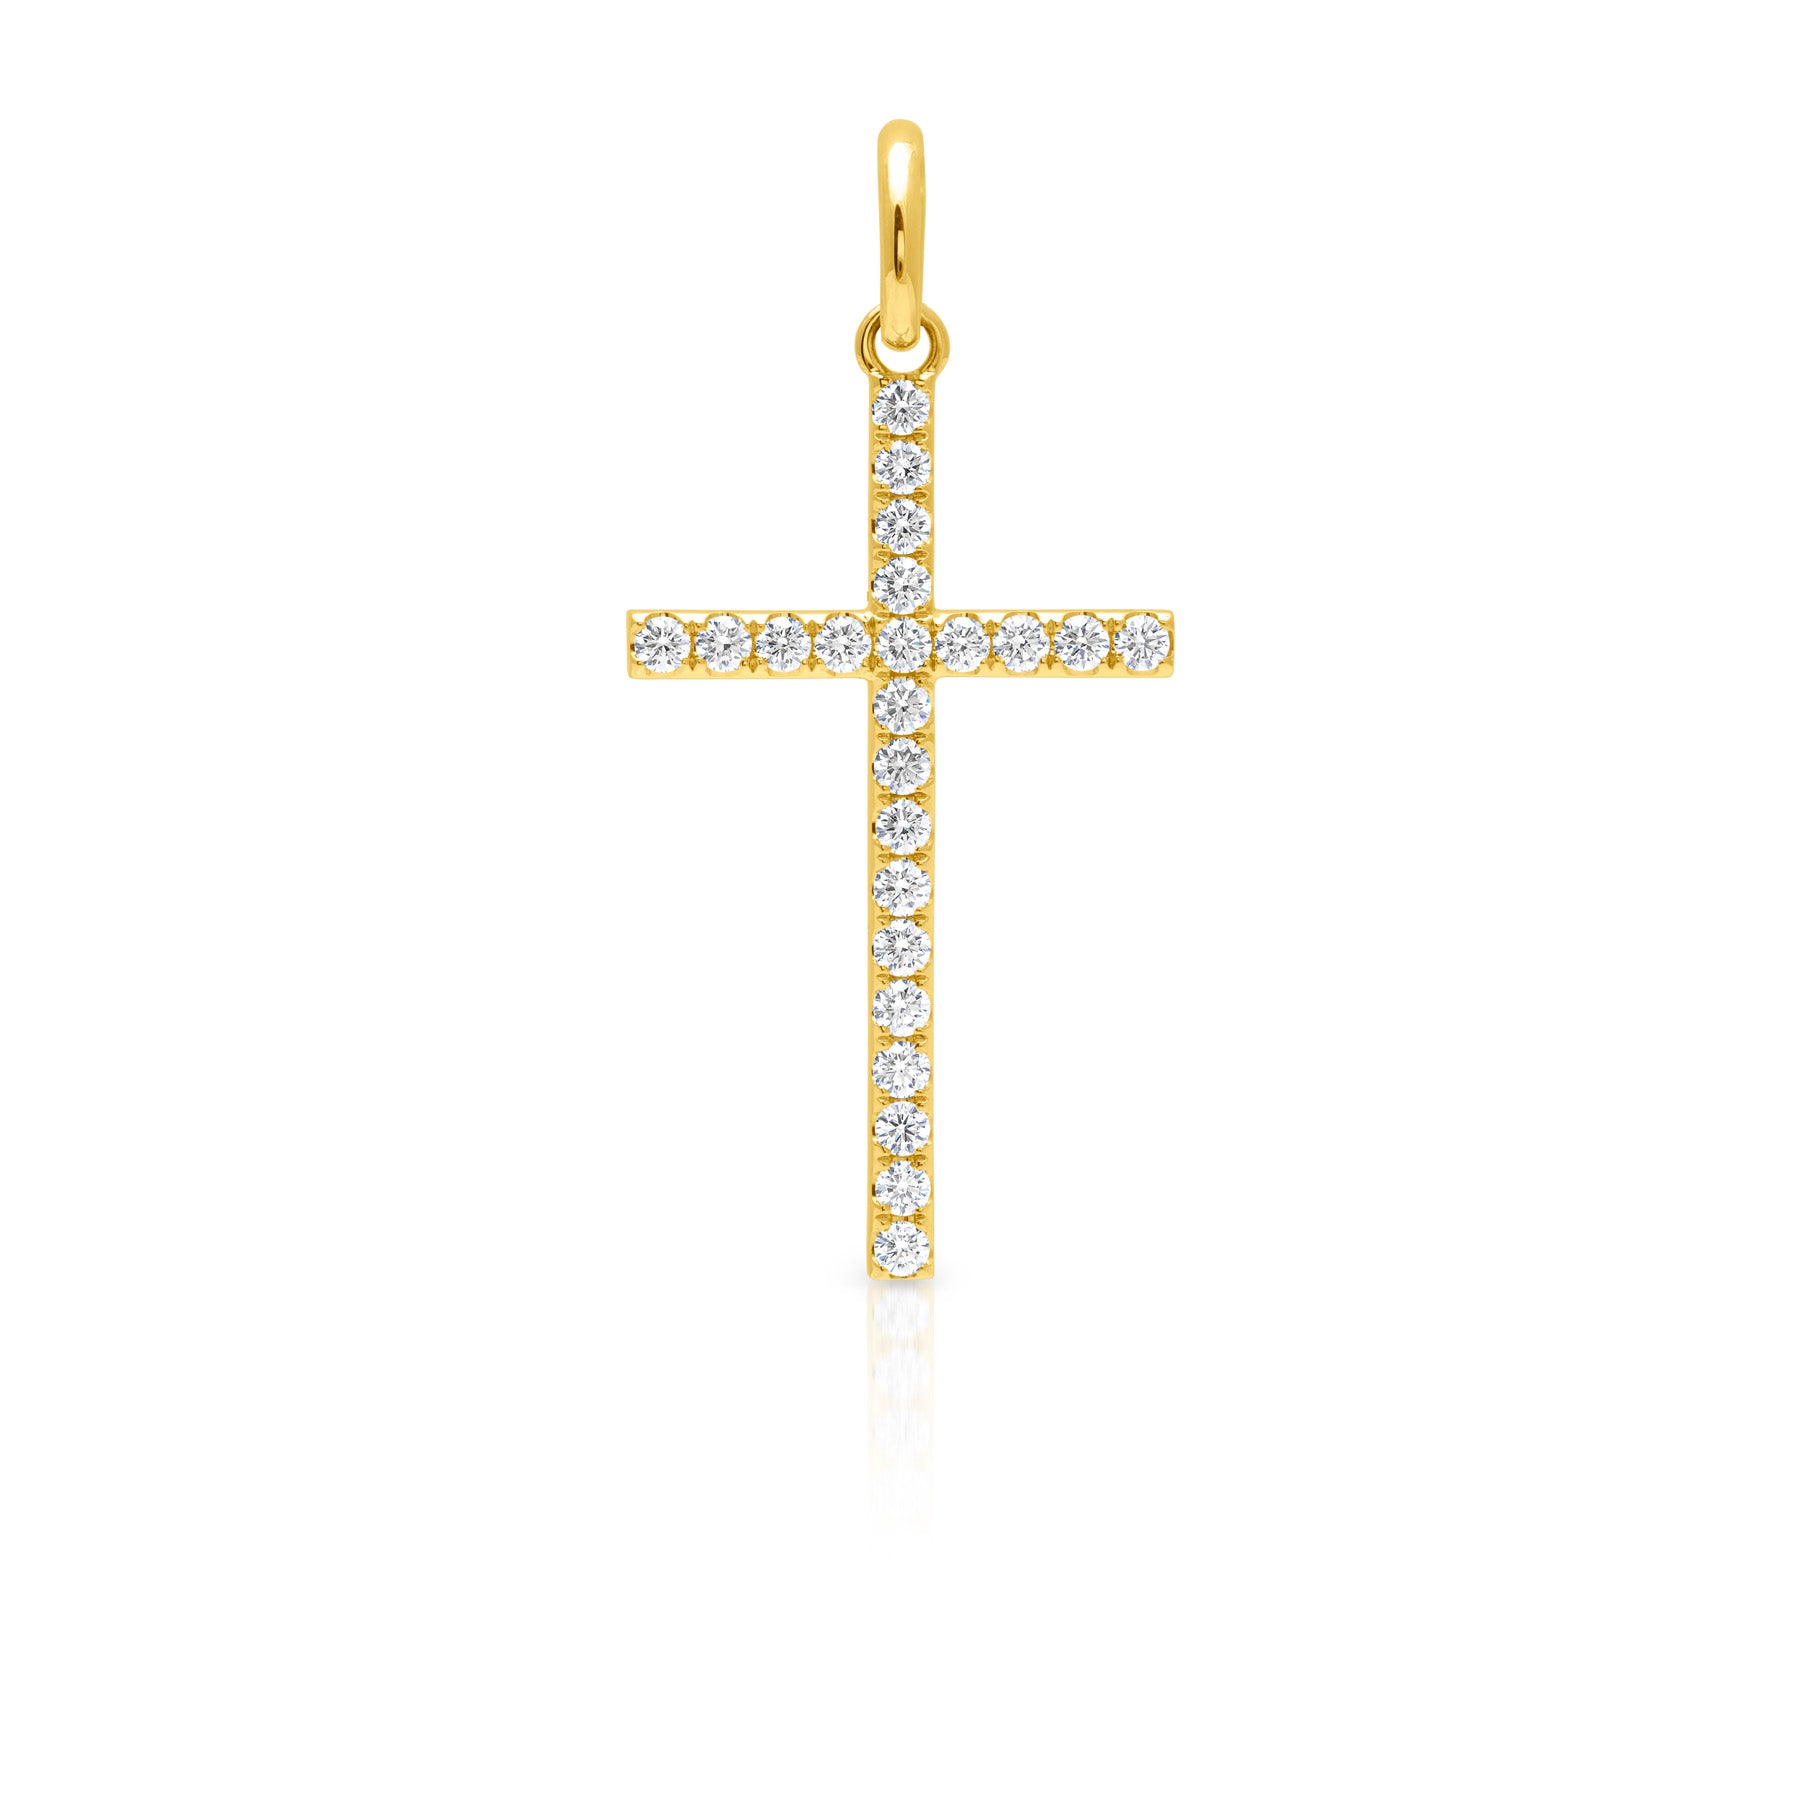 14KT Yellow Gold Diamond XL Cross Charm Pendant with Clip on Bail